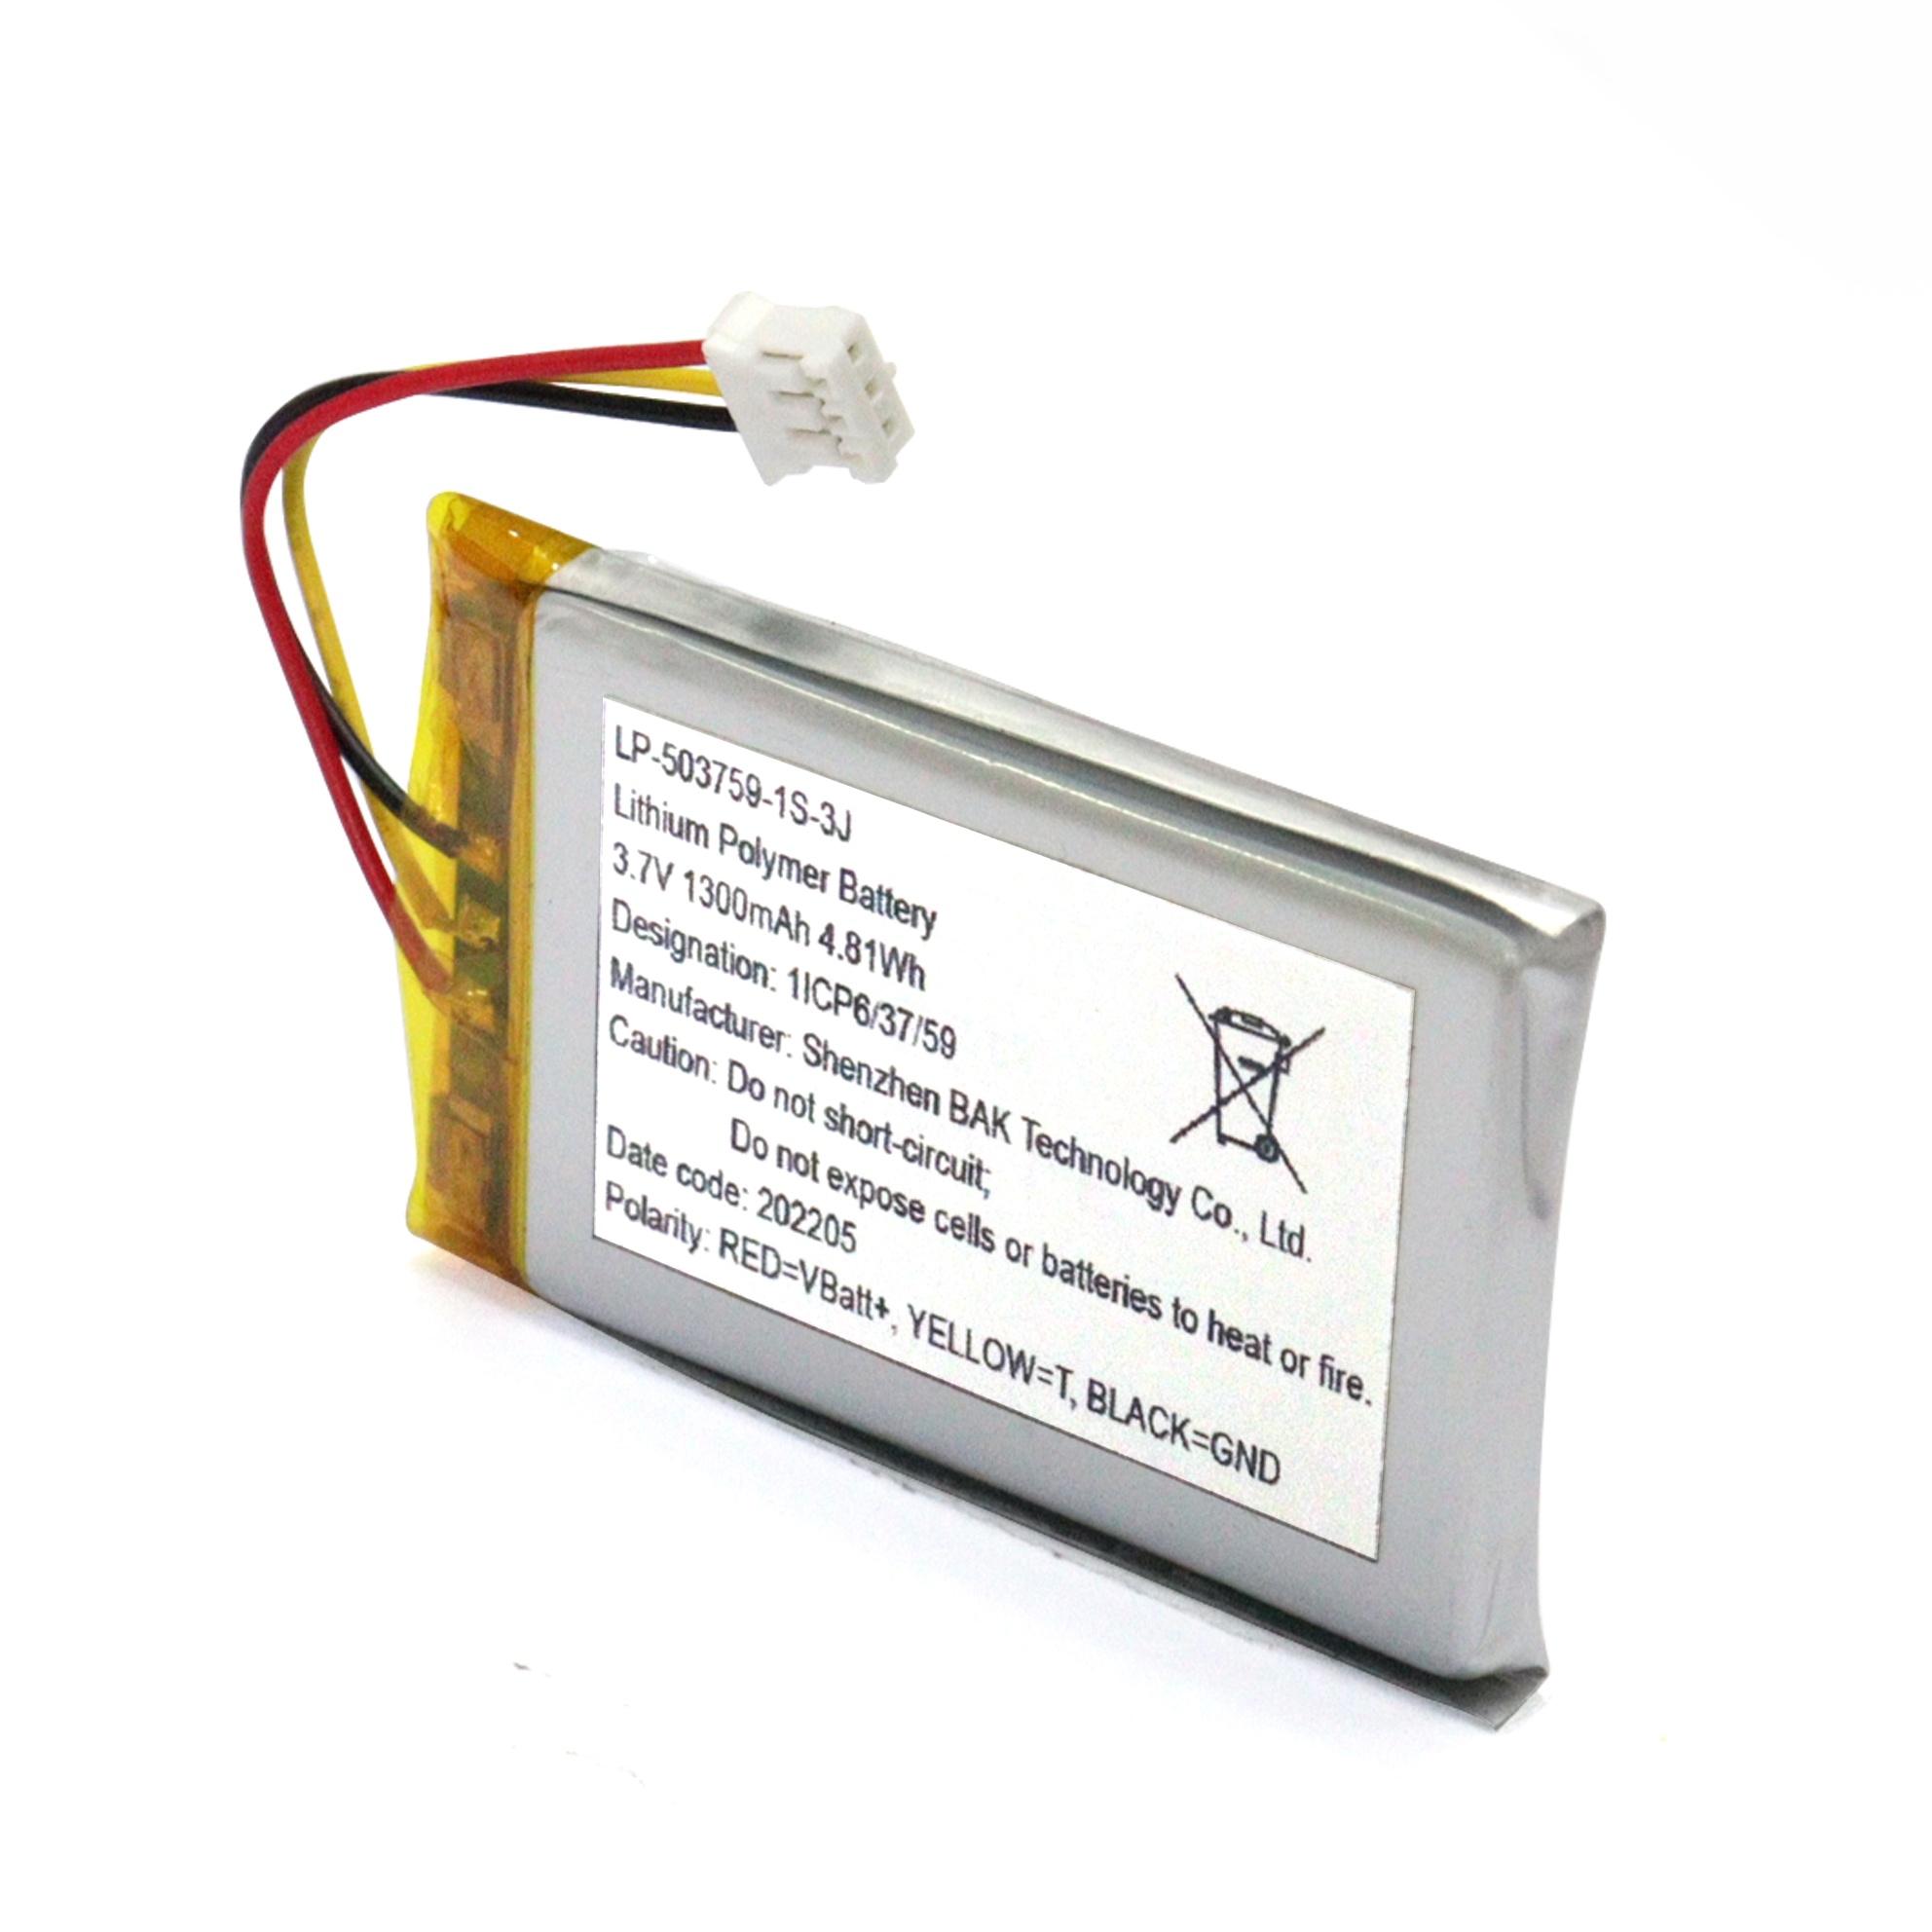 Bakth-503759P-1S-3J Lithium Polymer Rechargeable 3,7 V 1300mAh Batterie Pack 